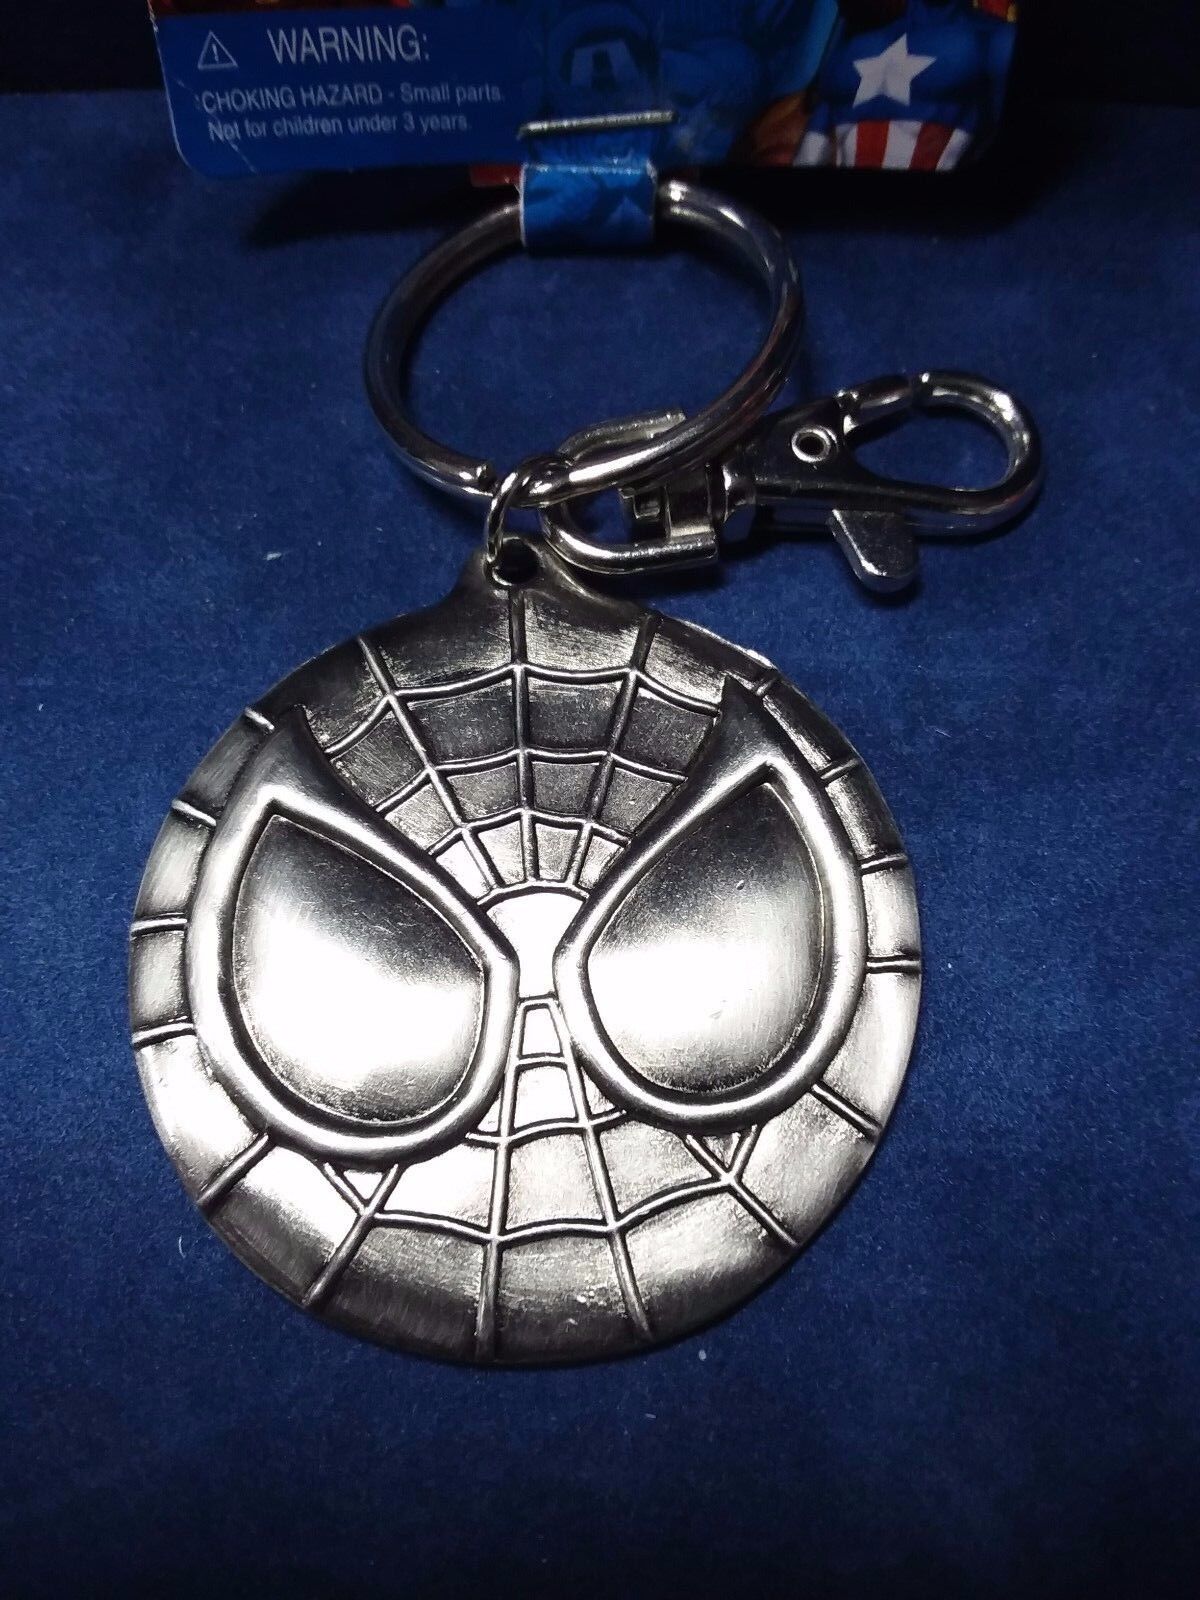 Spider-man Mask Keychain Keyring Pewter Marvel Heroes NWT